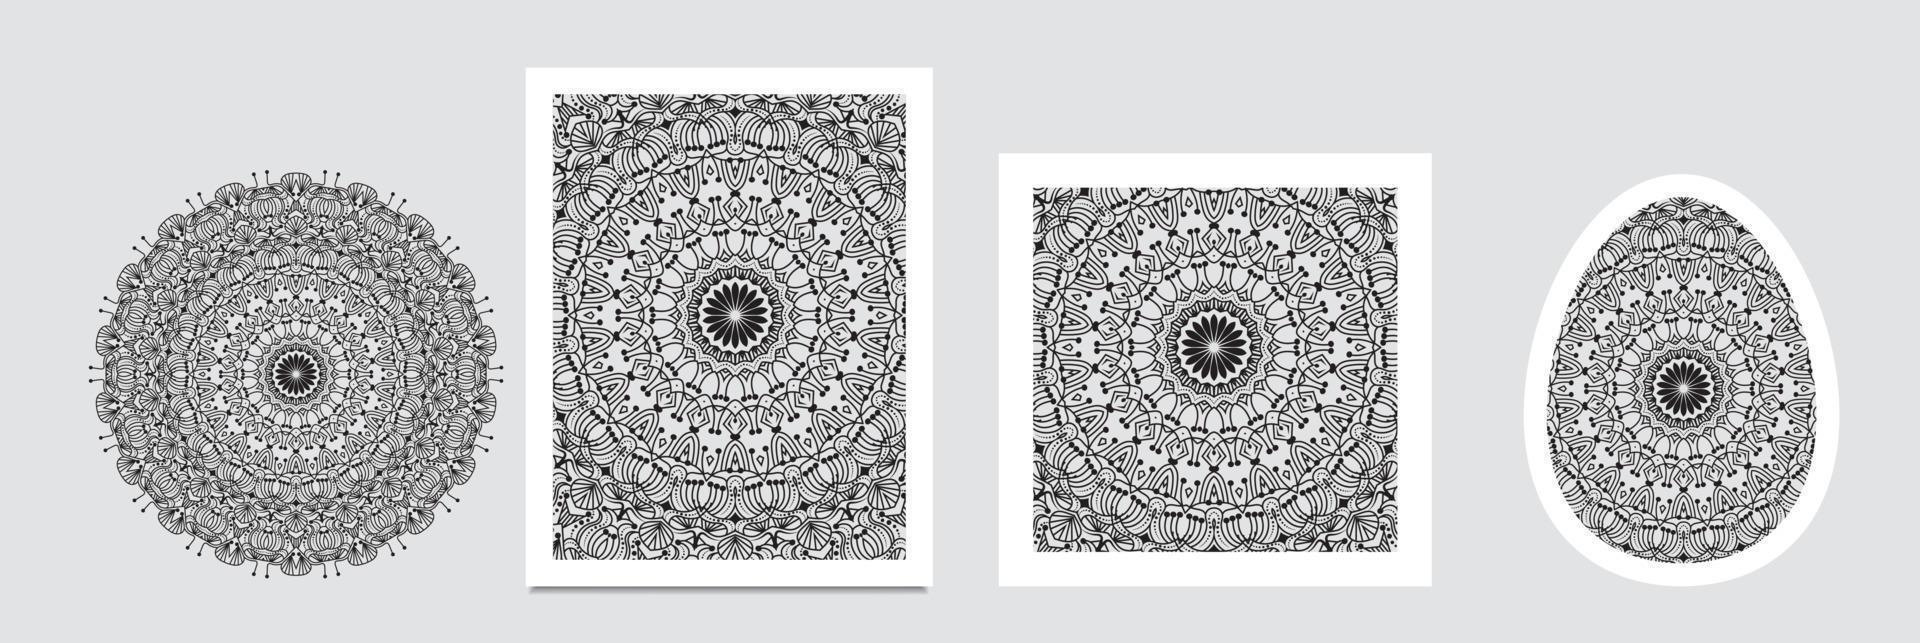 mandala pattern design for background, scarf pattern texture for print on cloth, cover photo, website, mandala decoration, retro, vintage, trend, 3d illustration, baroque vector